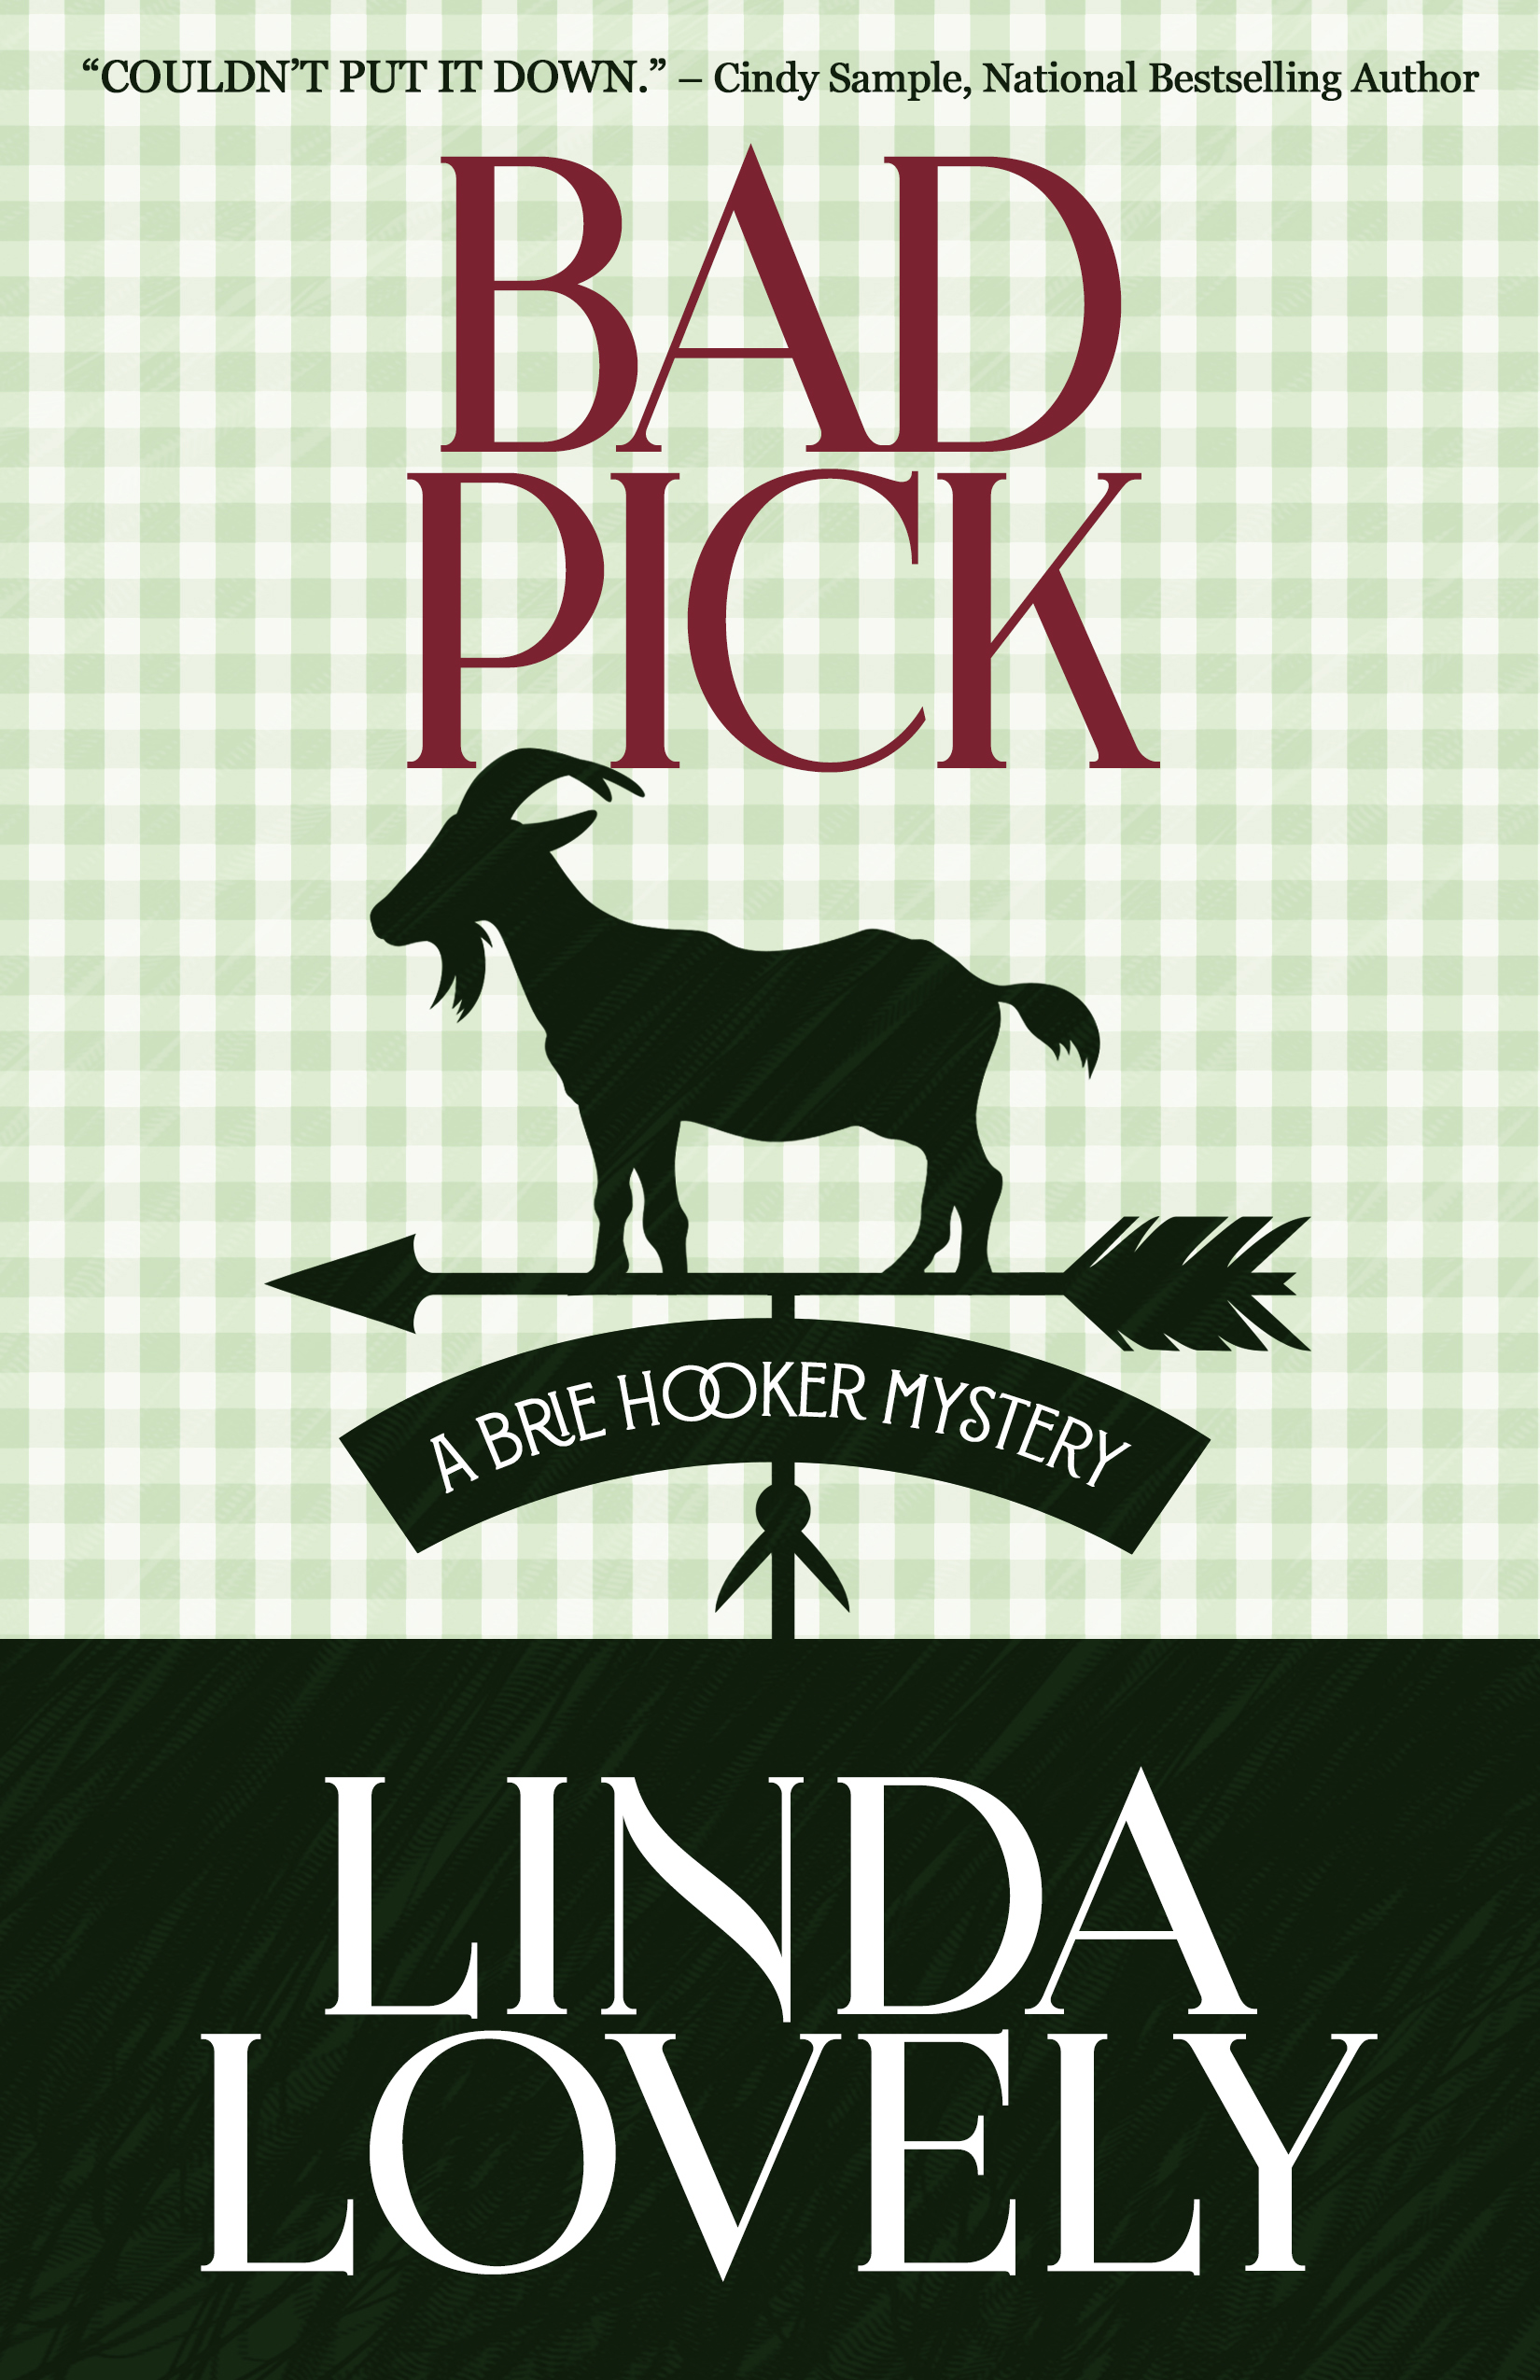 Bad Pick by Linda Lovely